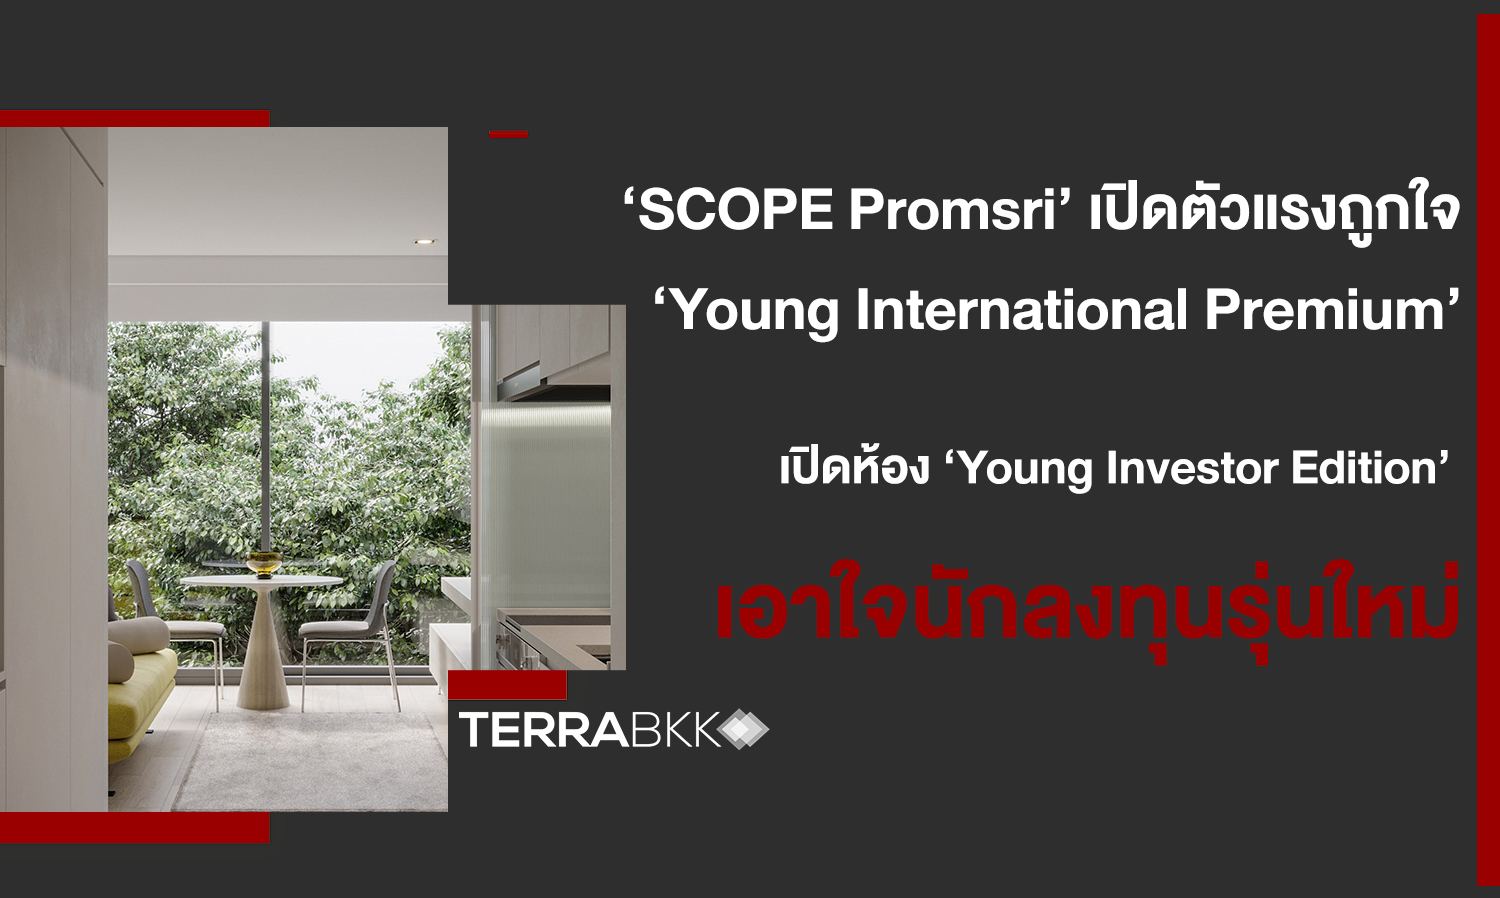 ‘SCOPE Promsri’ เปิดตัวแรงถูกใจ ‘Young International Premium’  เปิดห้อง ‘Young Investor Edition’ เอาใจทั้งนักลงทุนรุ่นใหม่และผู้เช่าหนุ่มสาวชาวญี่ปุ่น